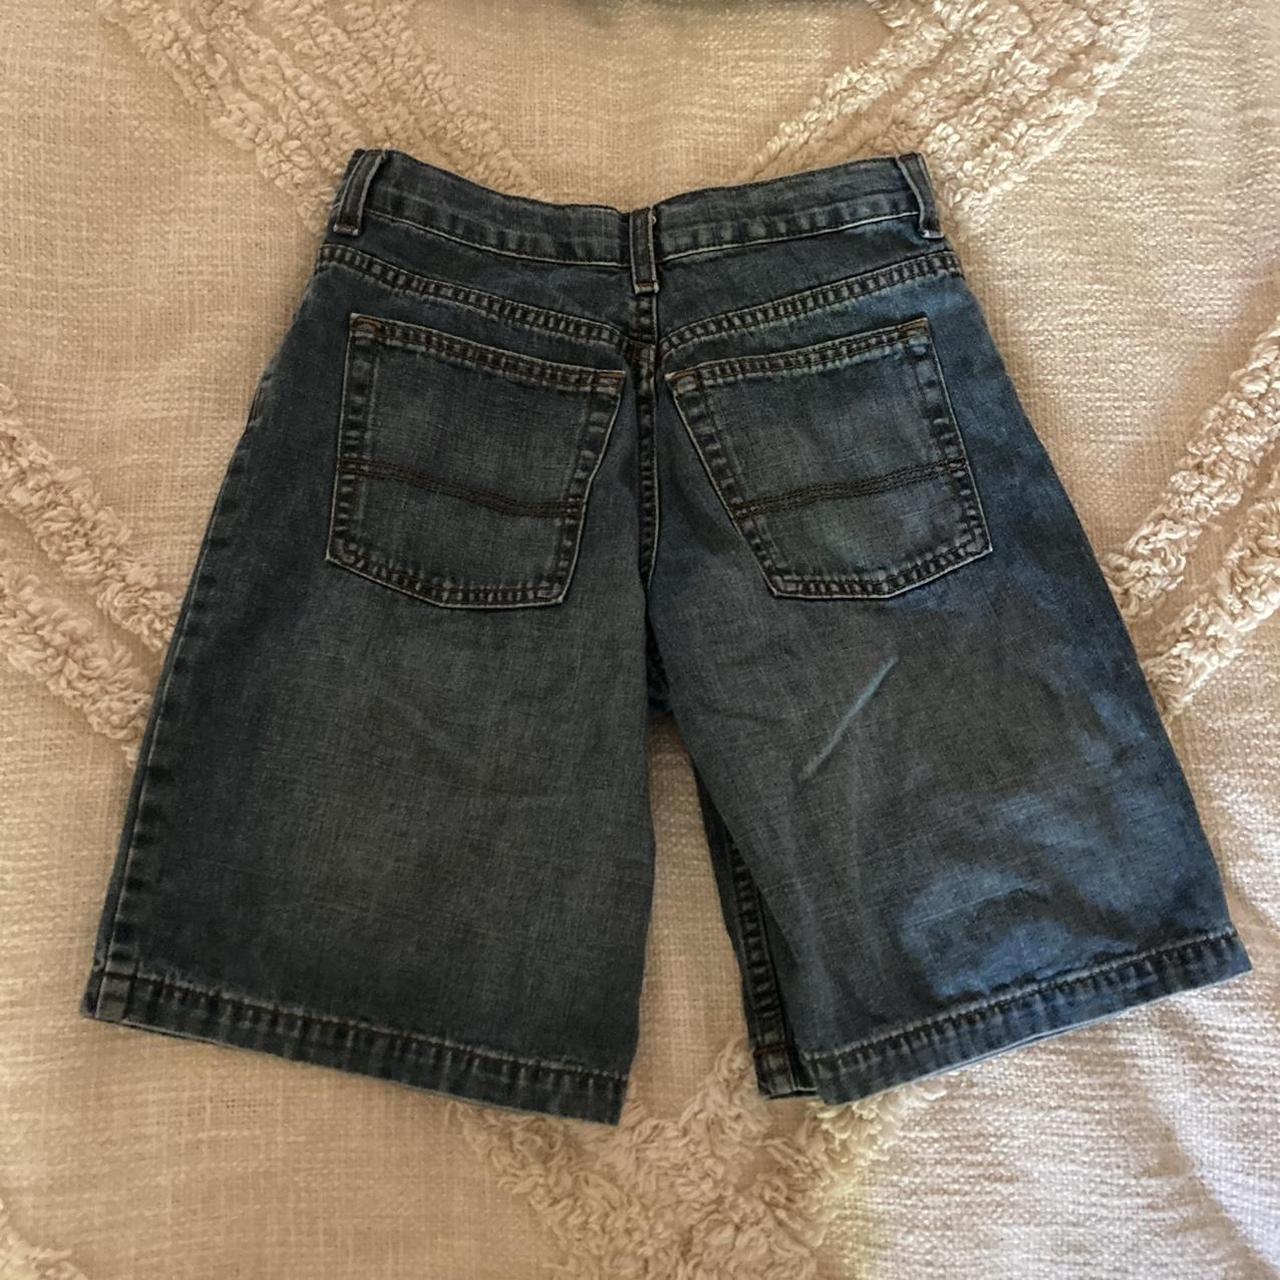 Vintage jean jorts featuring back pockets, marked a... - Depop